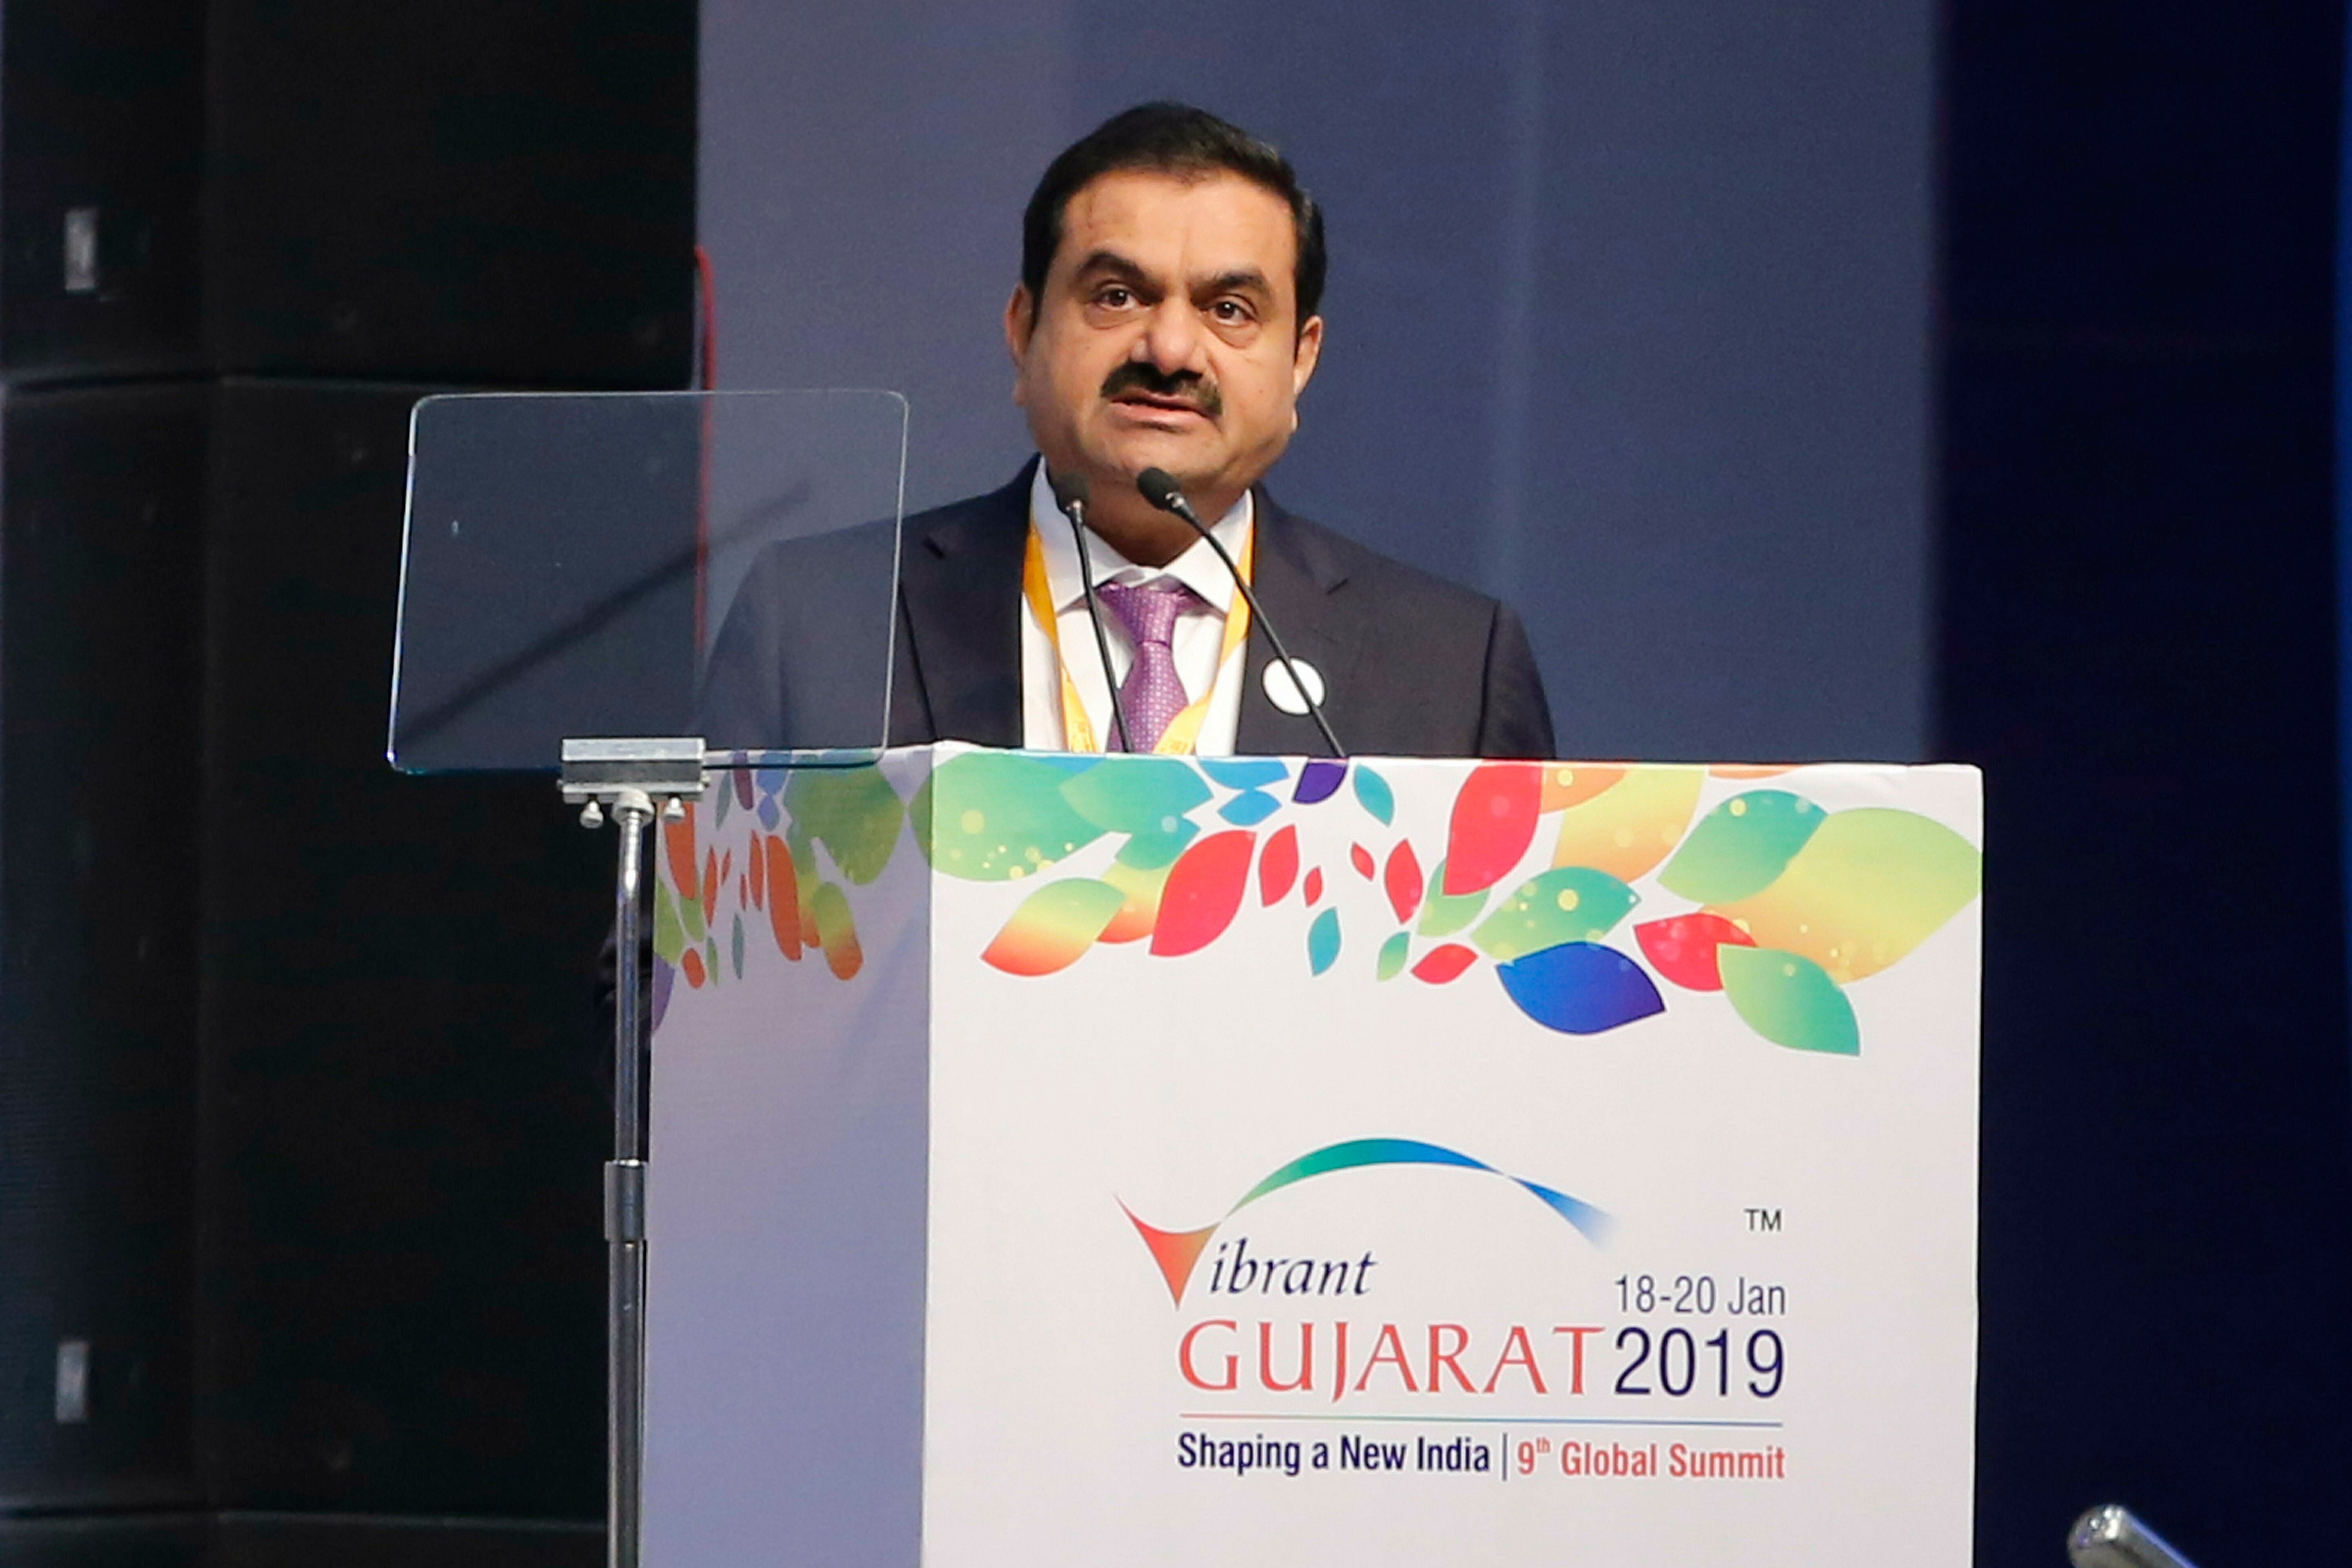 Adani group Chairman Gautam Adani speaks during the inauguration of the 9th Vibrant Gujarat Global Summit in Gandhinagar, India, 18 January 2019